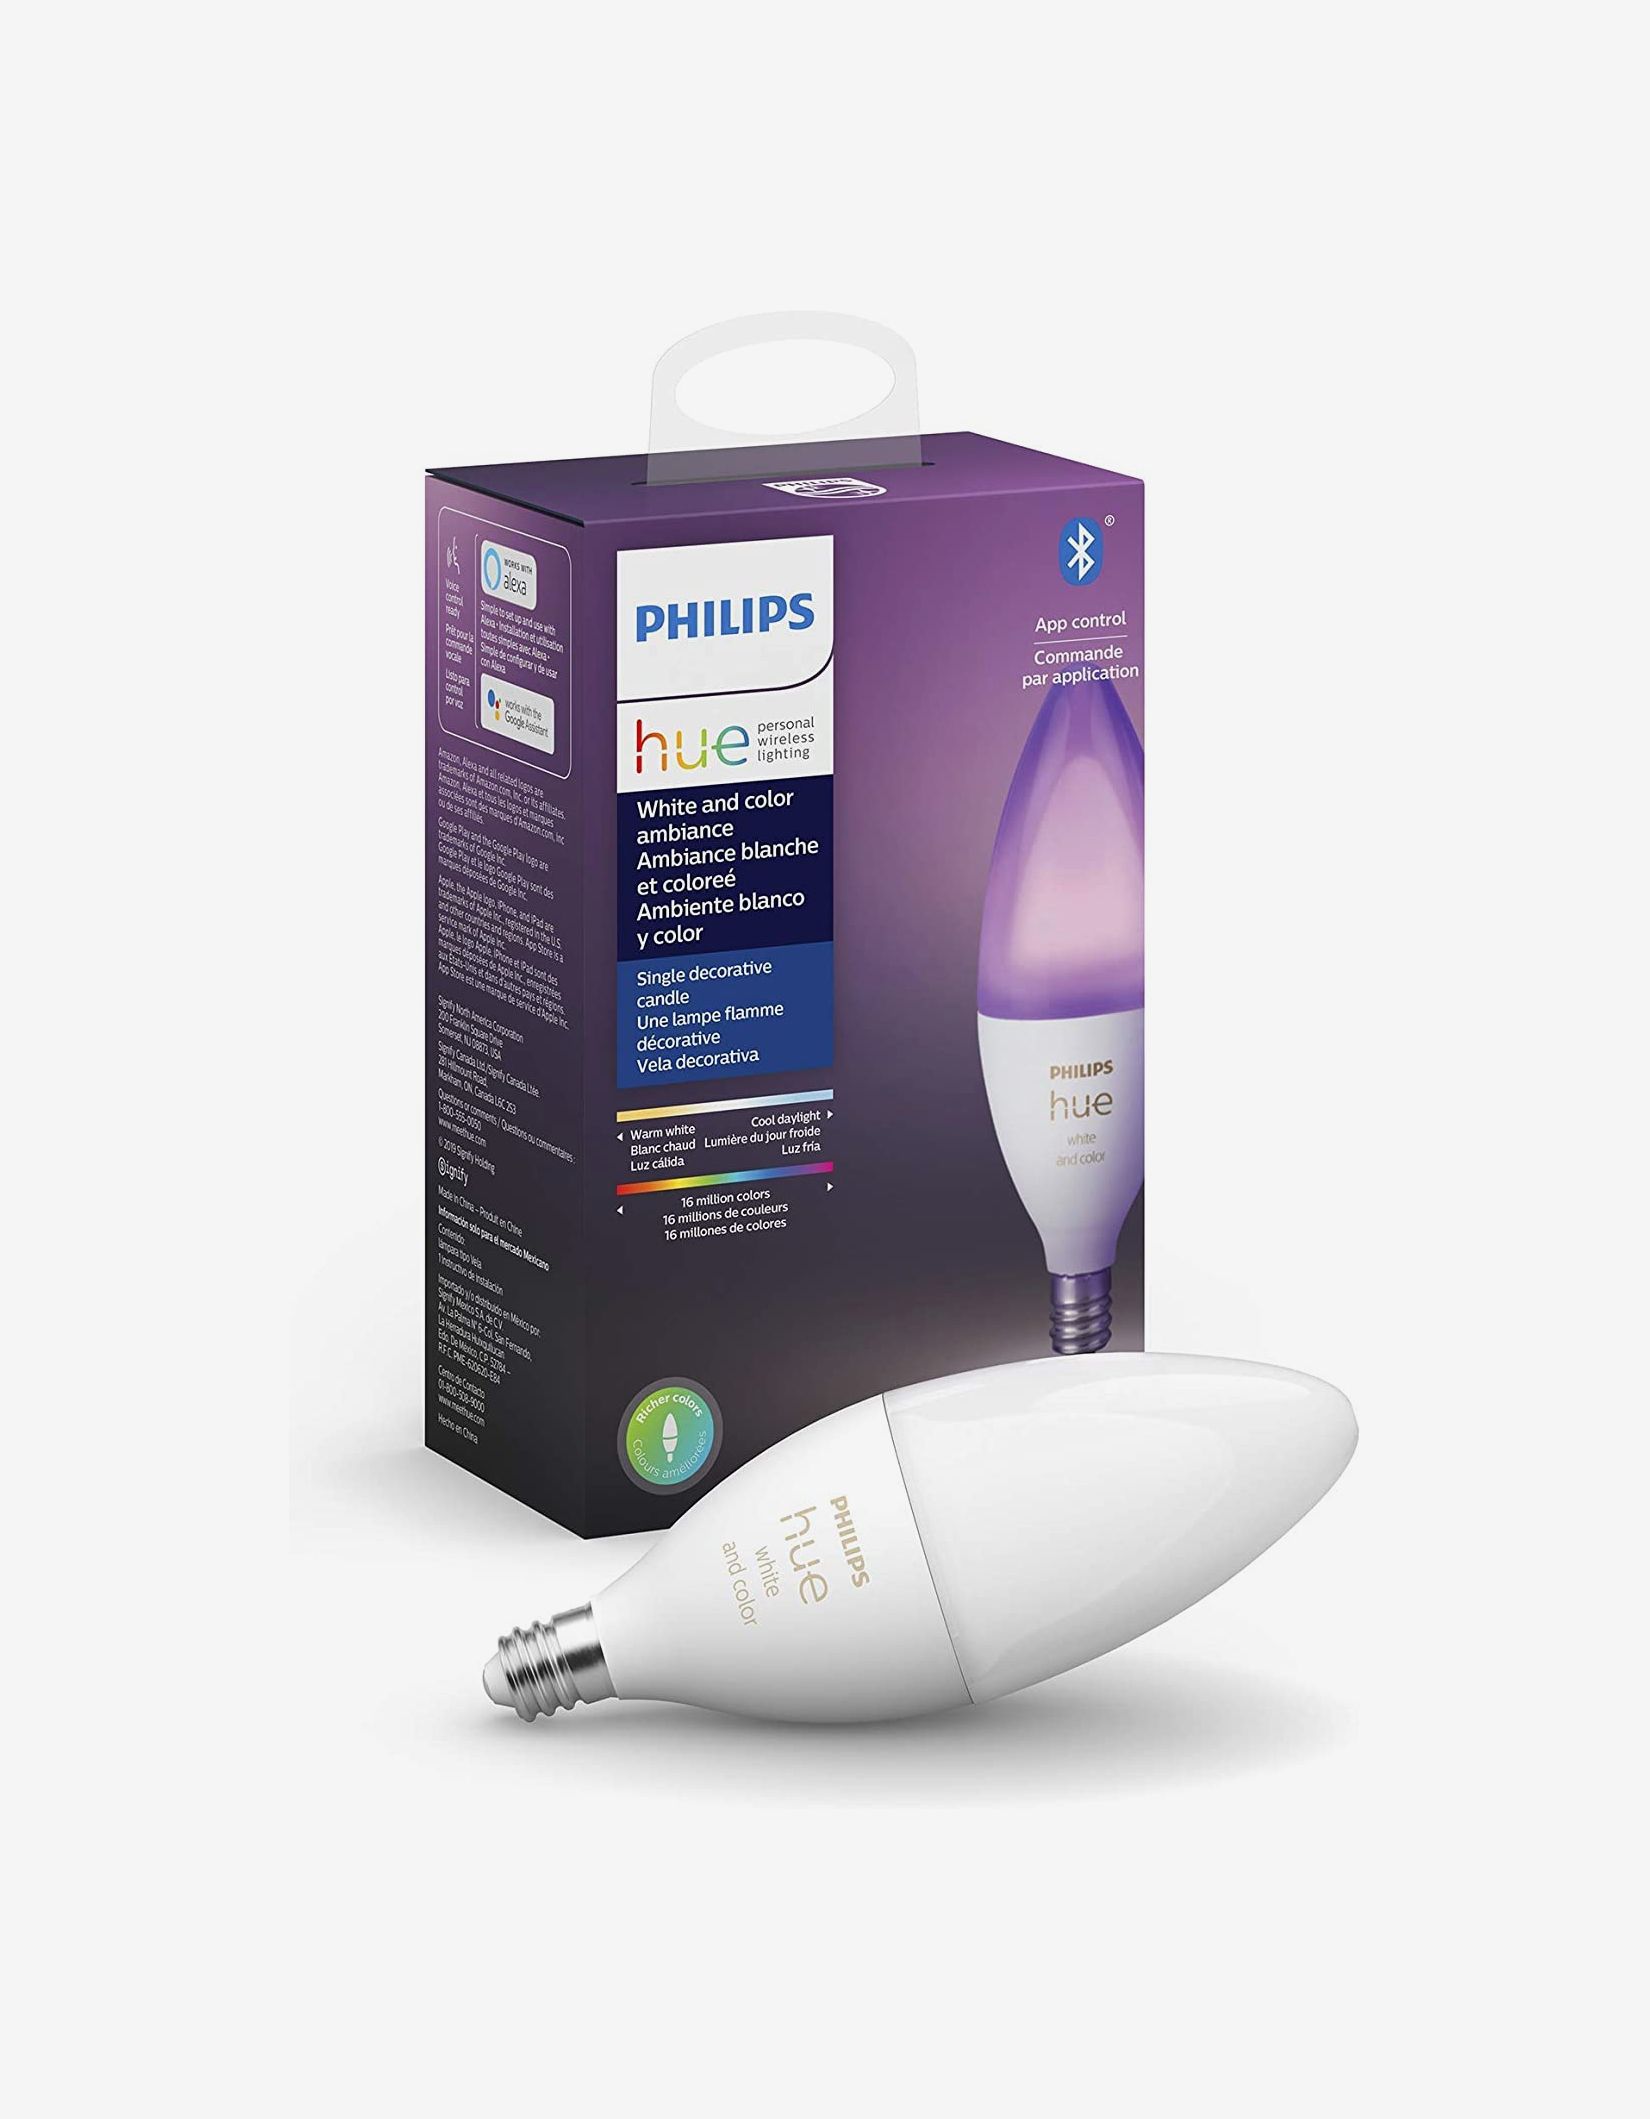 Wixann 9W Smart LED Light Bulb Review: Cheap Color Bulbs for All - Dengarden